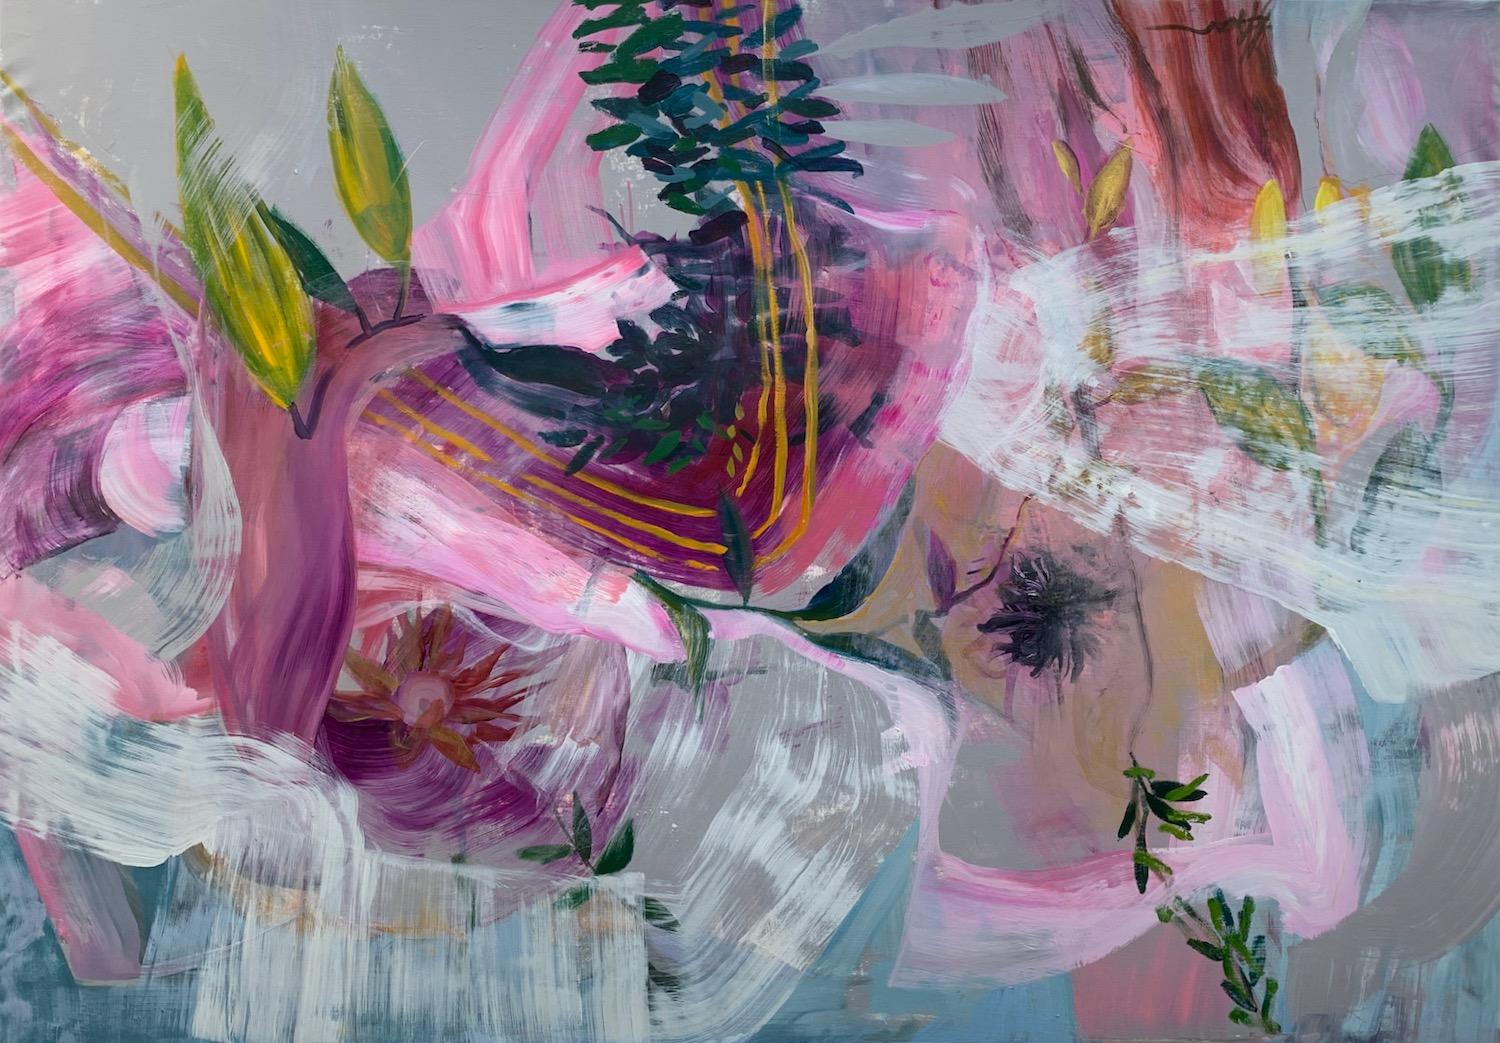 Abstract Painting Julia Hacker - Force de la vie, peinture abstraite